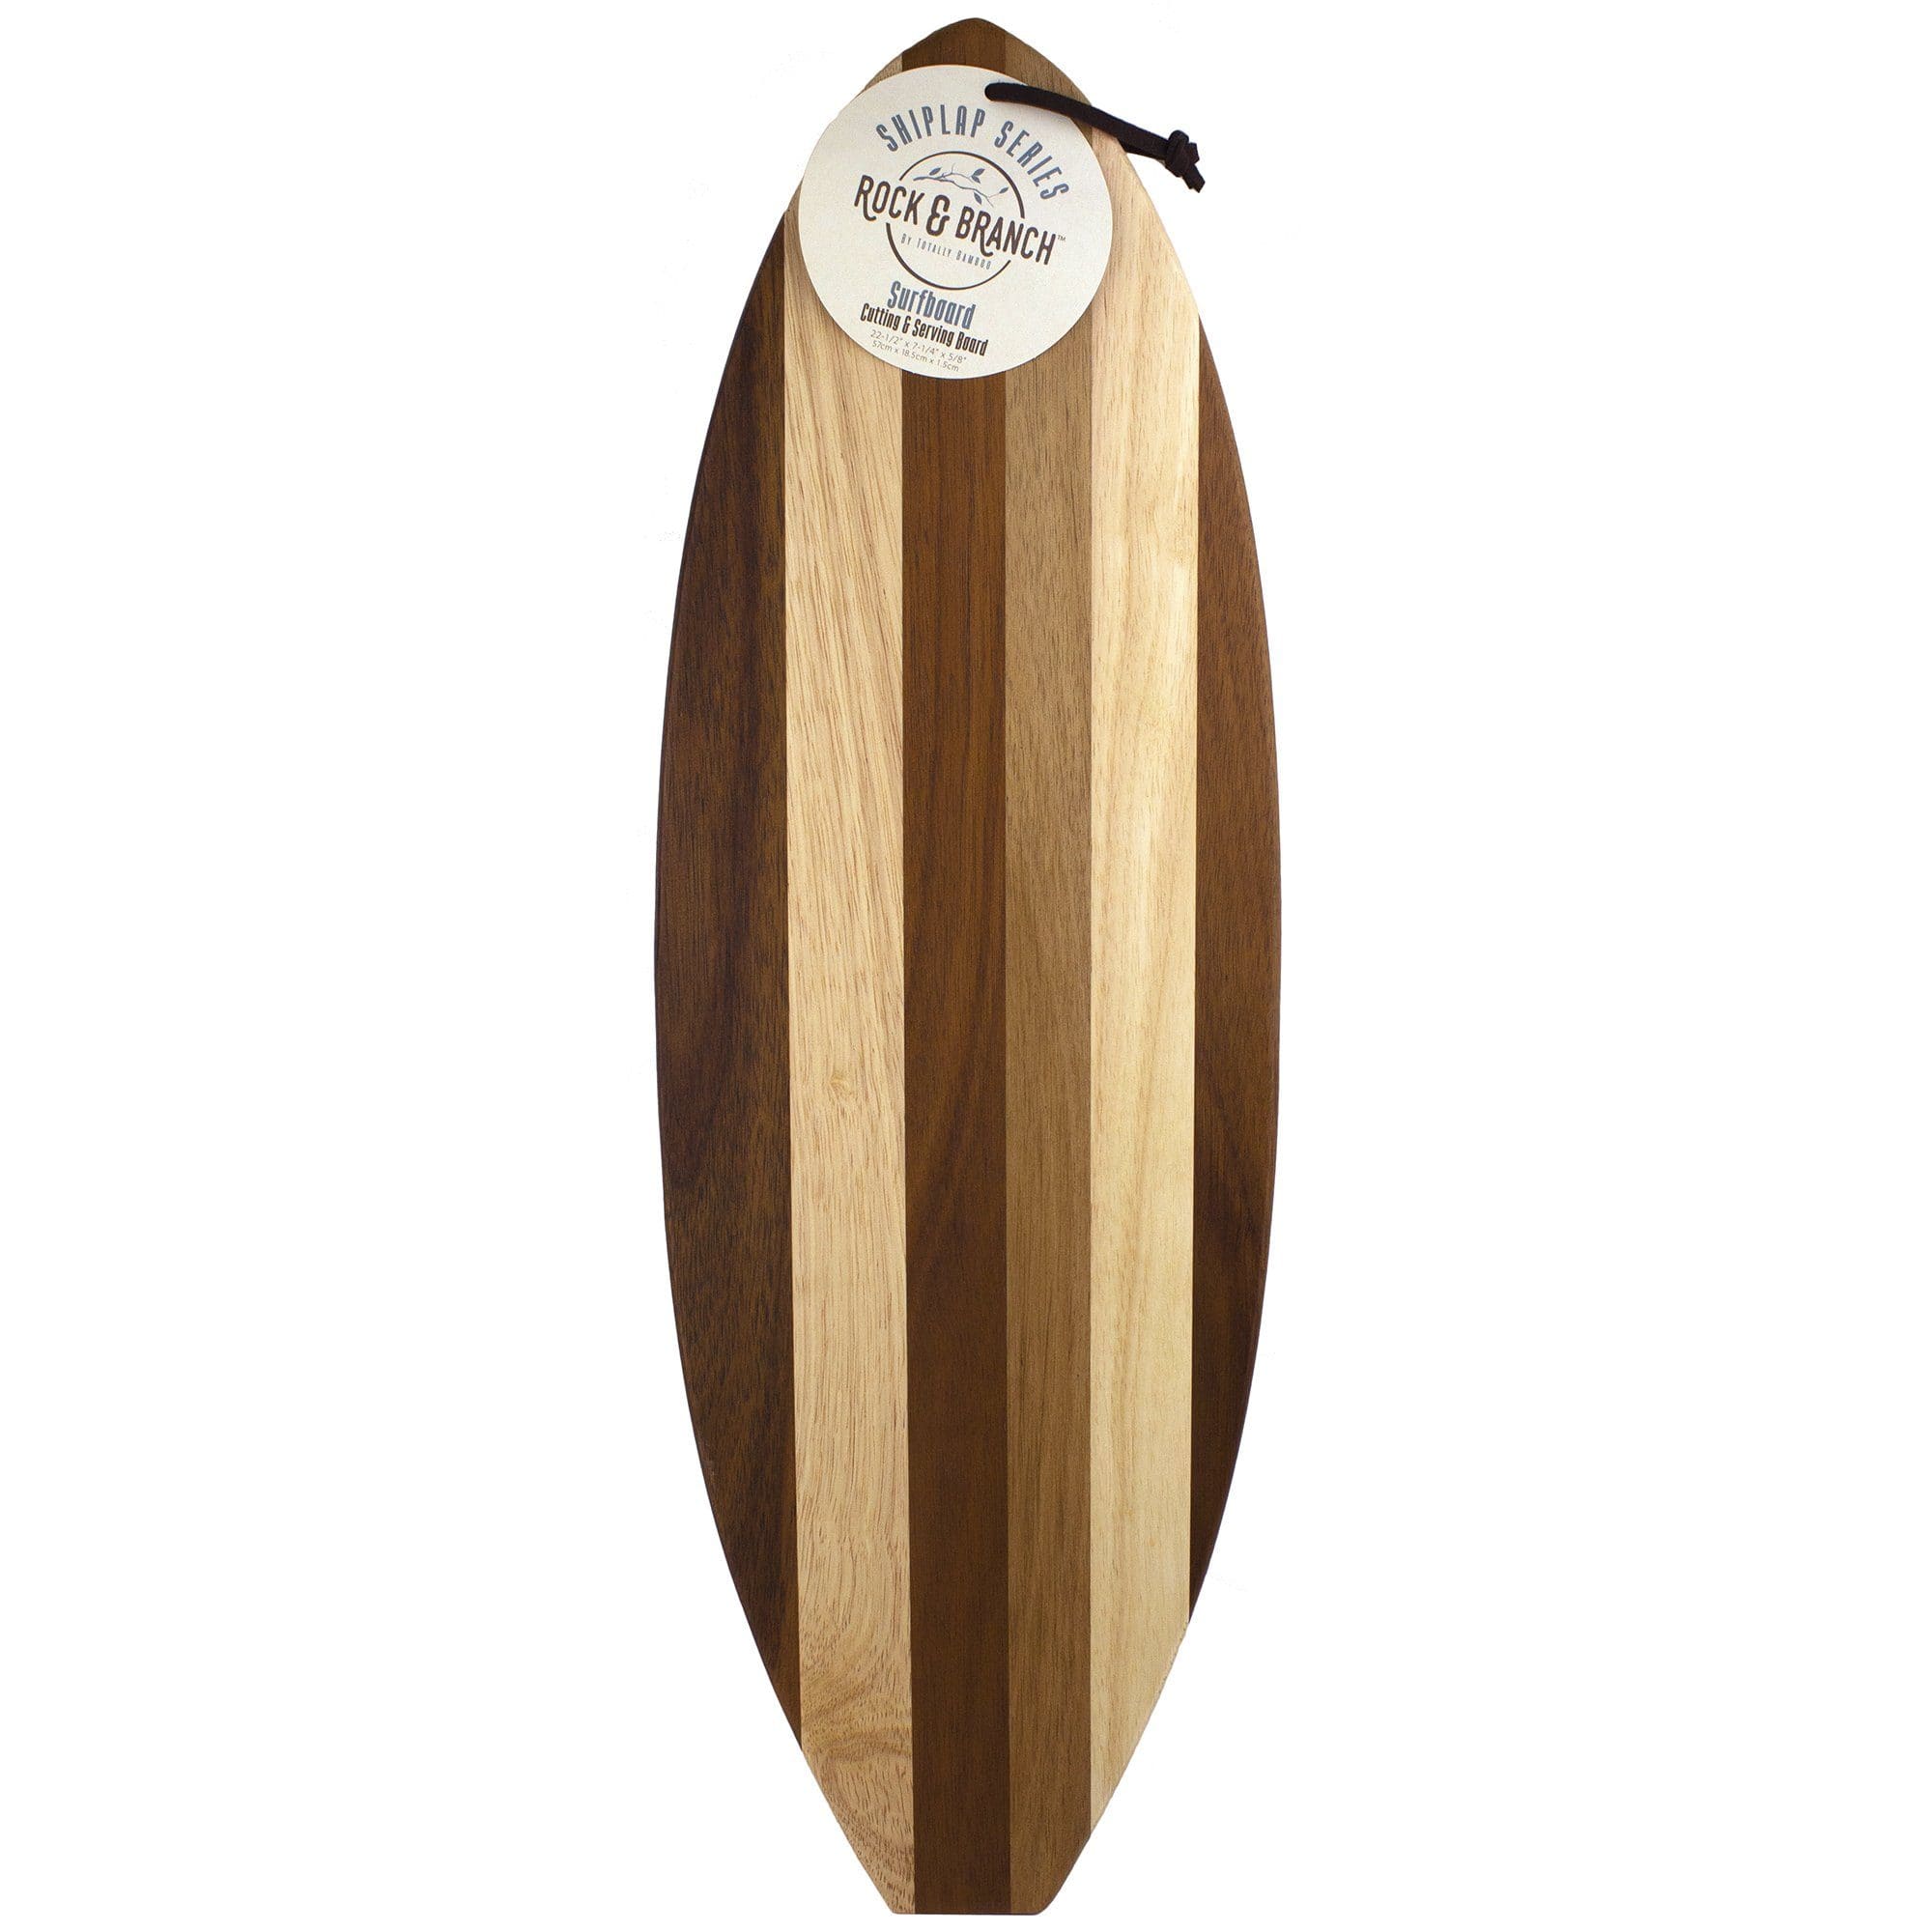 Surfboard shaped cutting boards